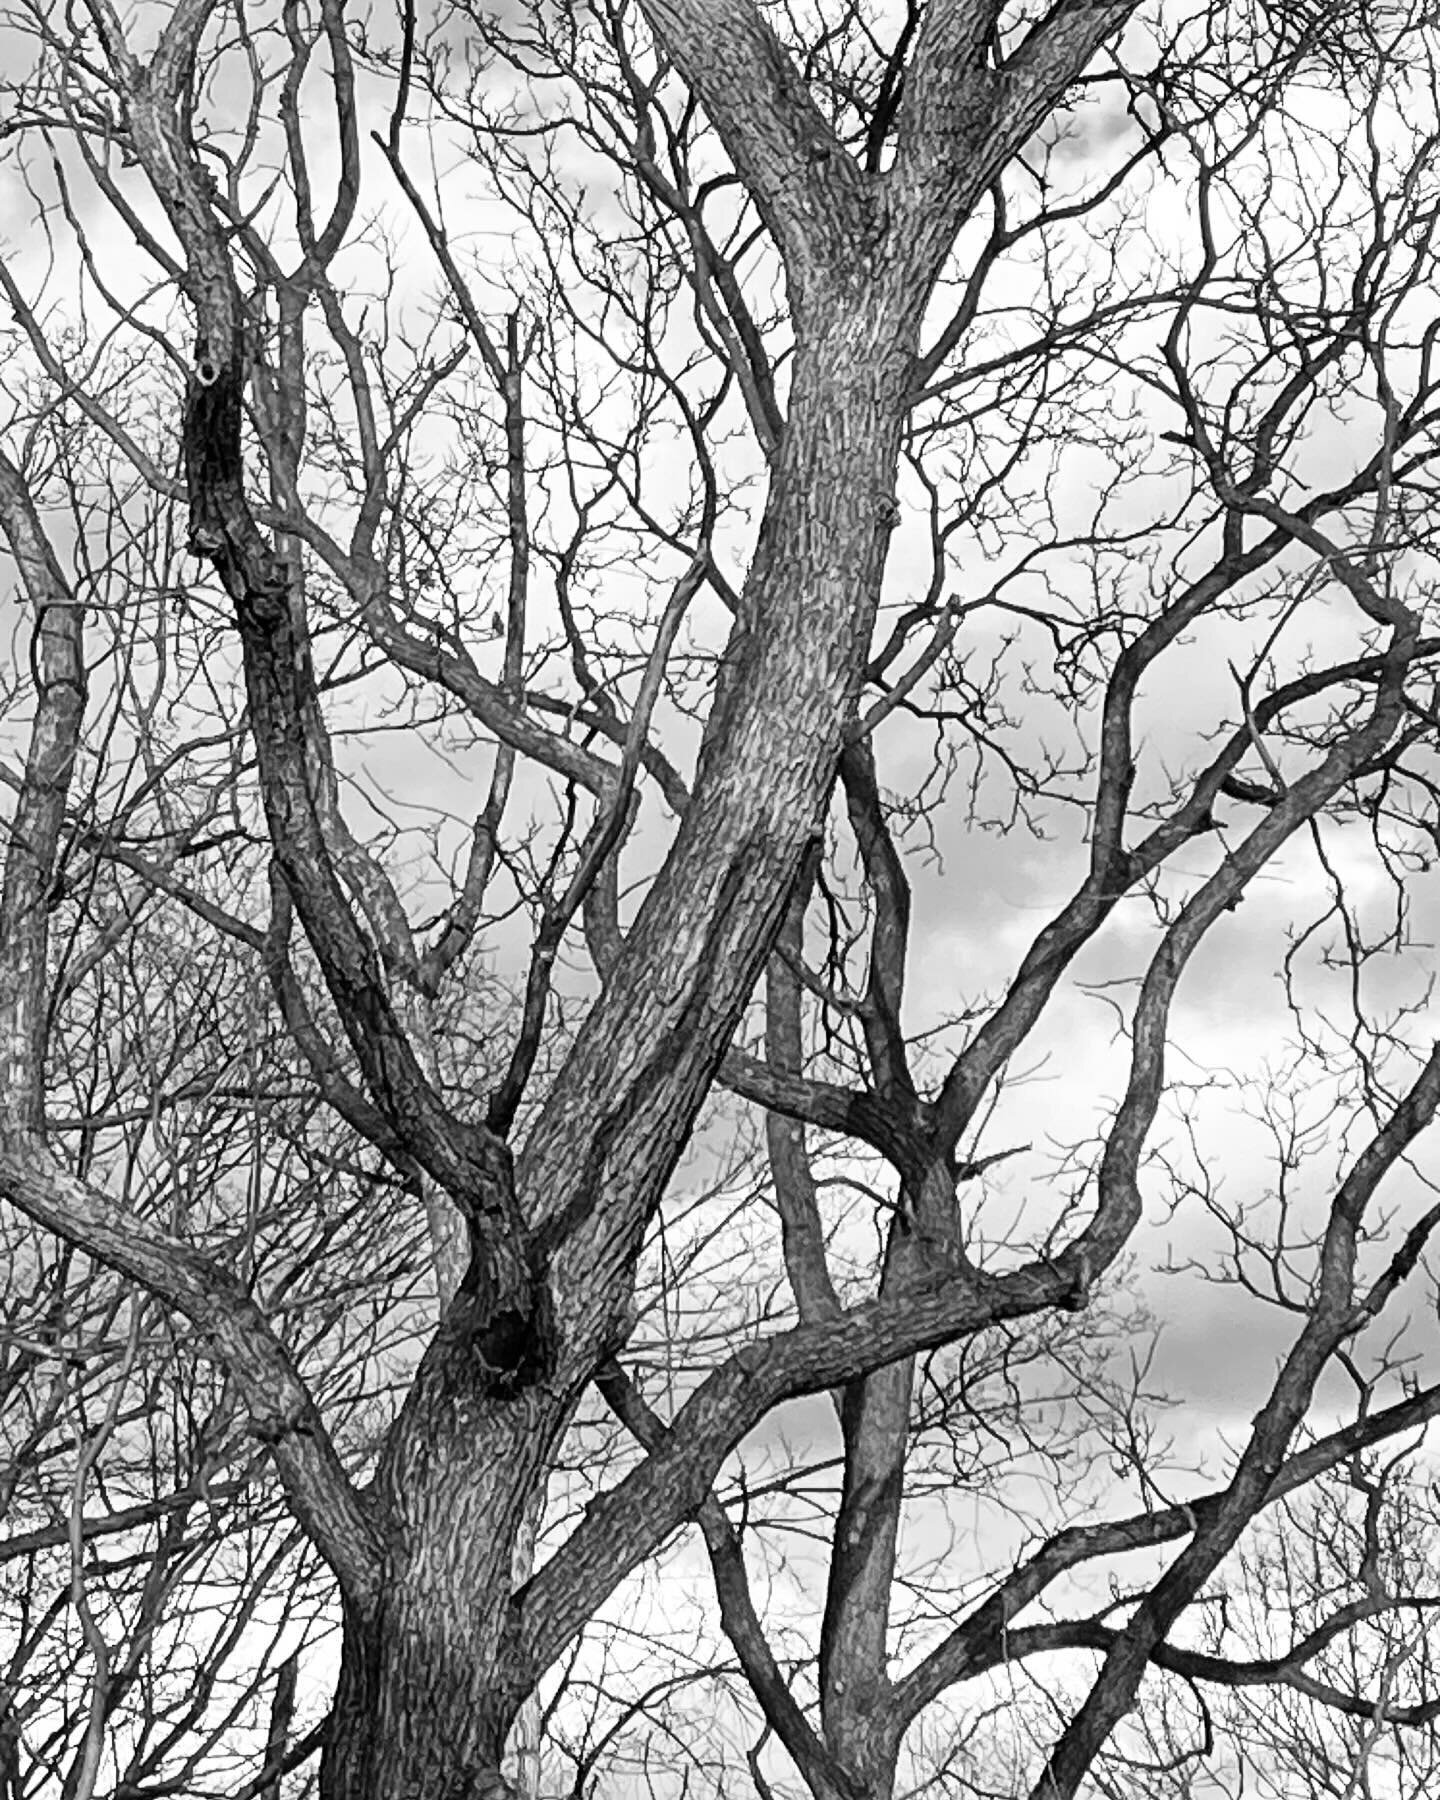 Stories from the road. Among the trees. #ArtEarthSpirit #ChuckPeg #GenesisArt #ArtSanctuary